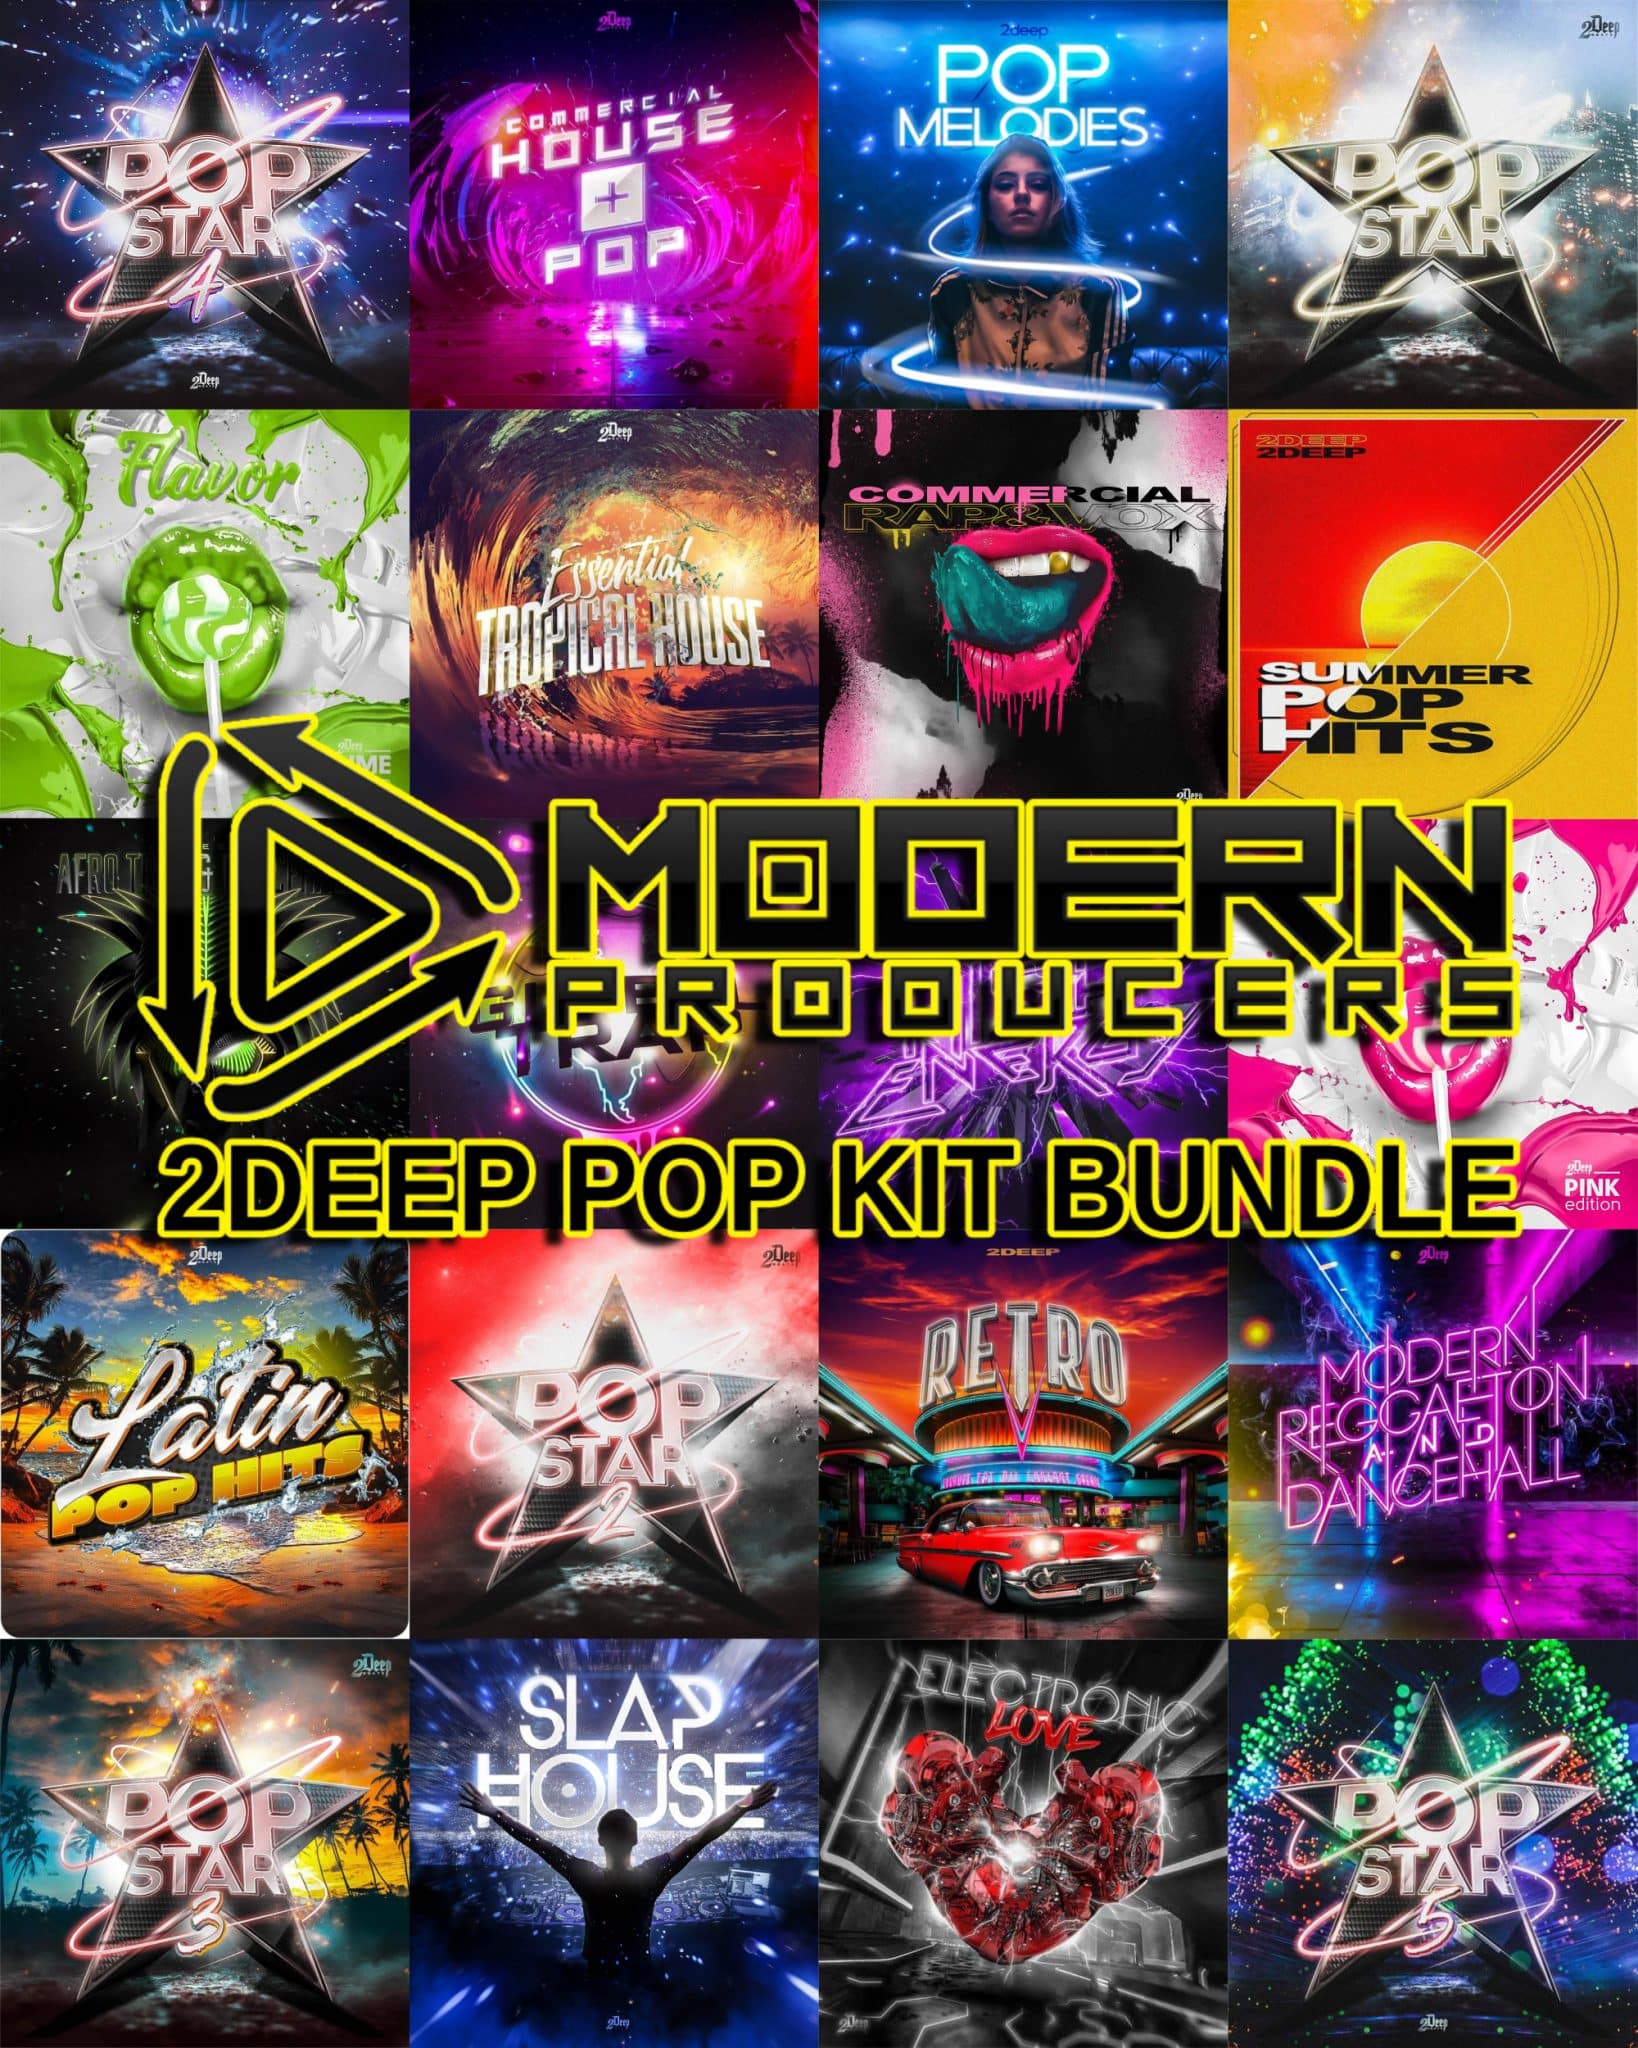 95% off “2DEEP Pop Kit Bundle 2021” by Modern Producers